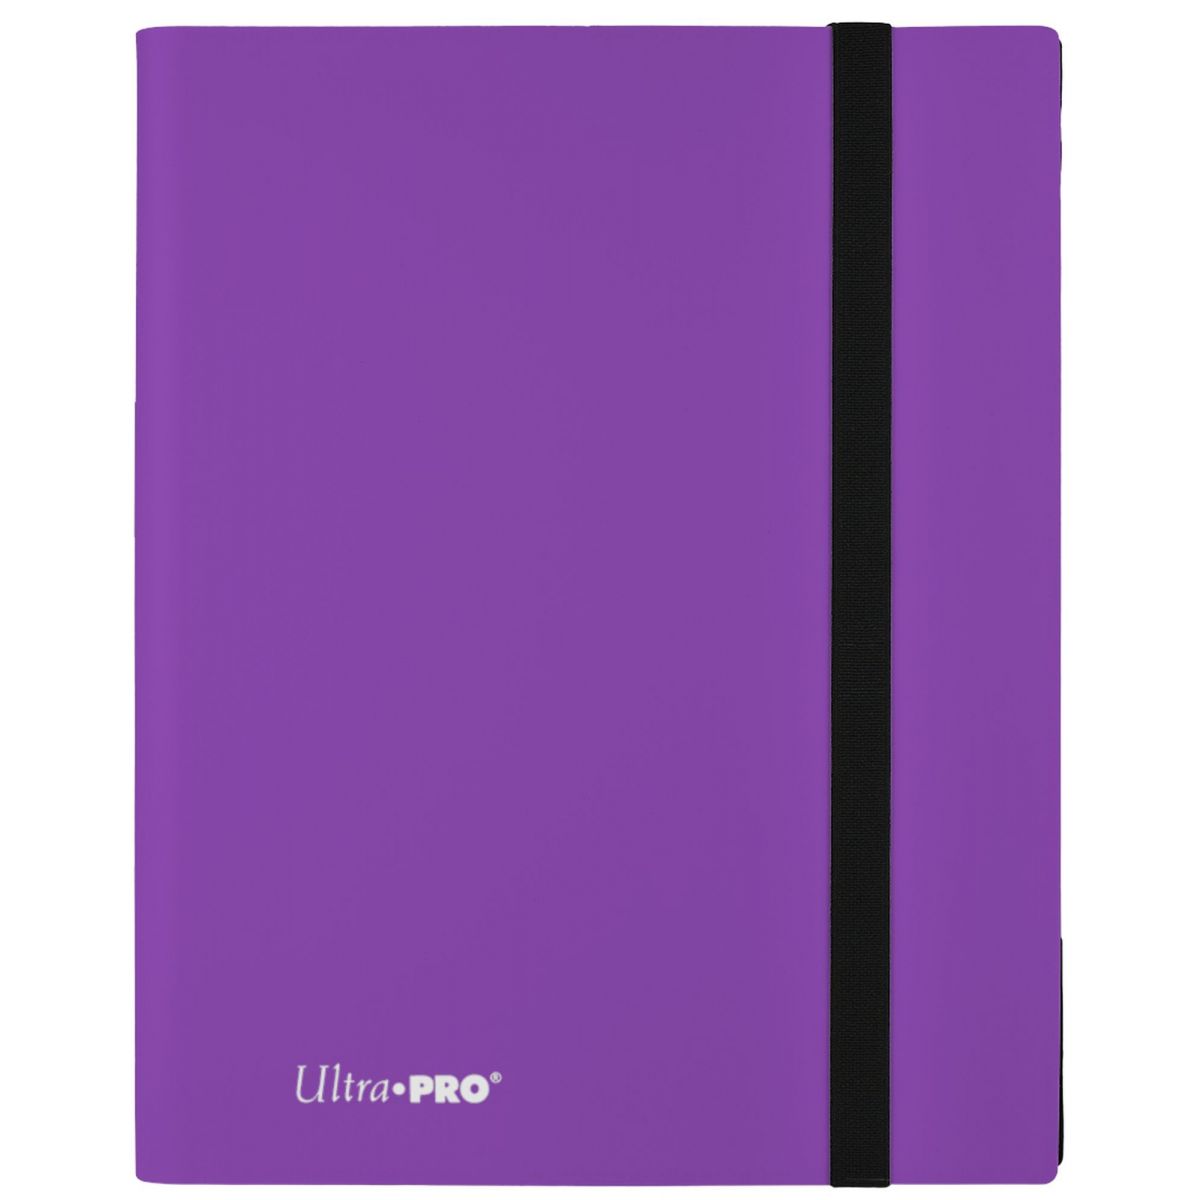 Ultra Pro - Pro Binder - Eclipse - 9 Cases - Violet / Royal Purple (360)